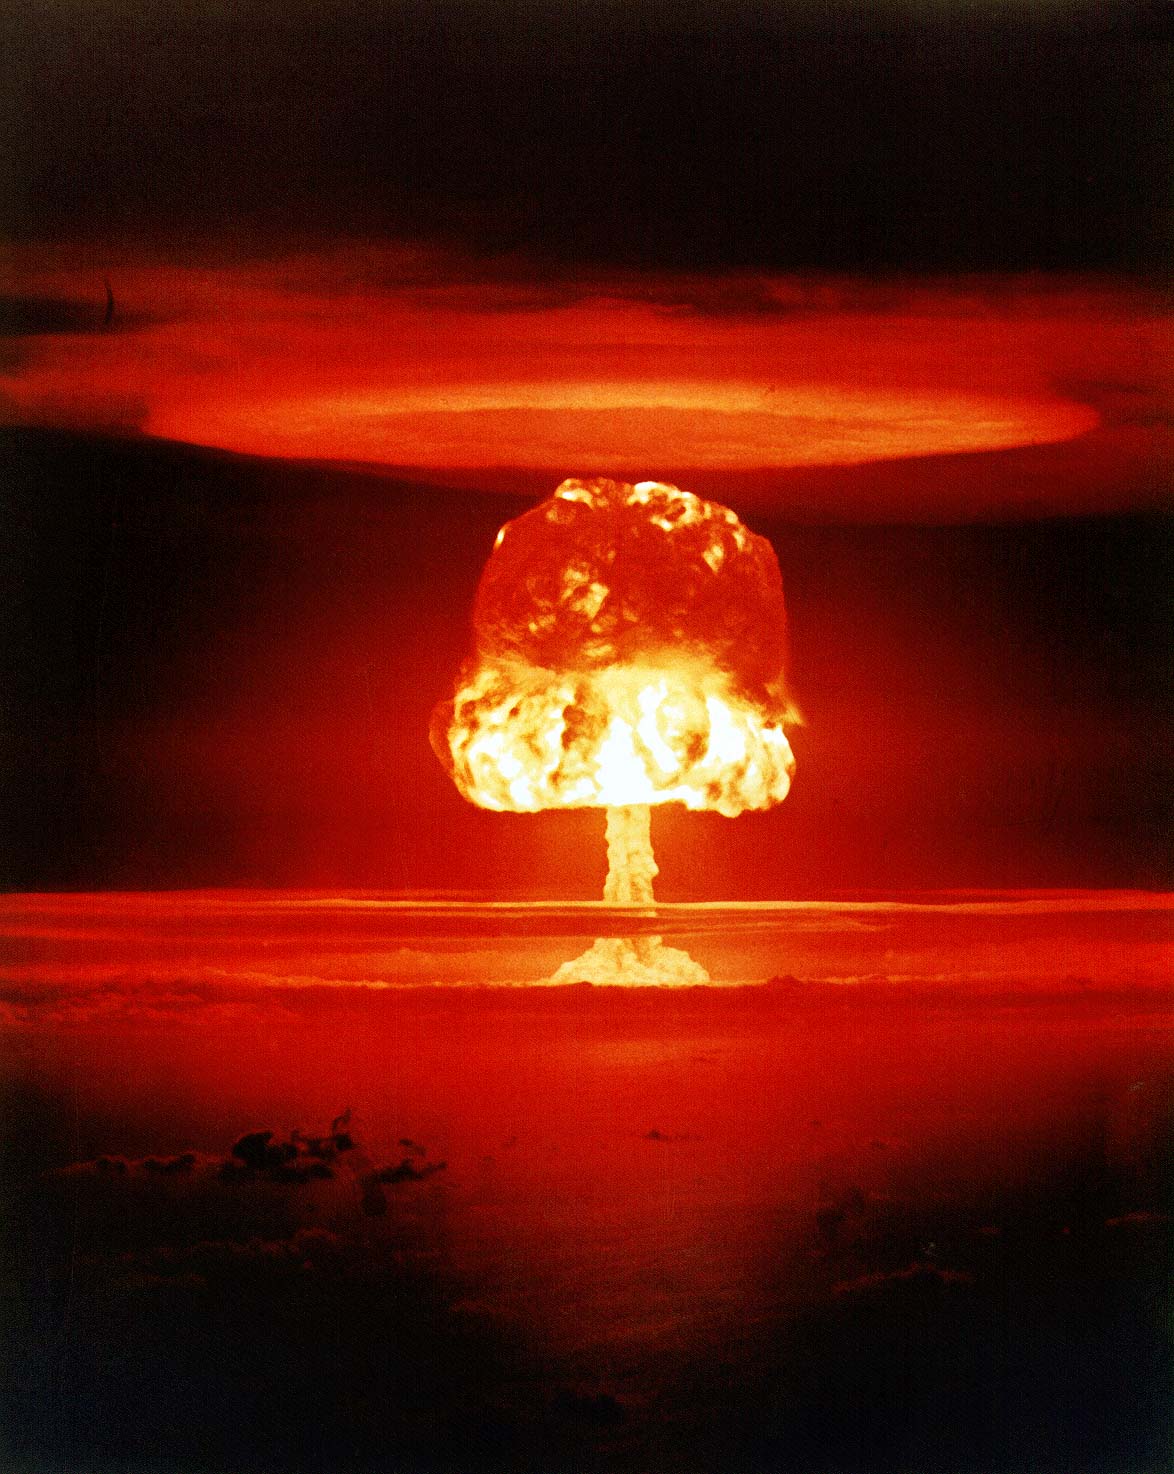 Thermonuclear test at Bikini Atoll